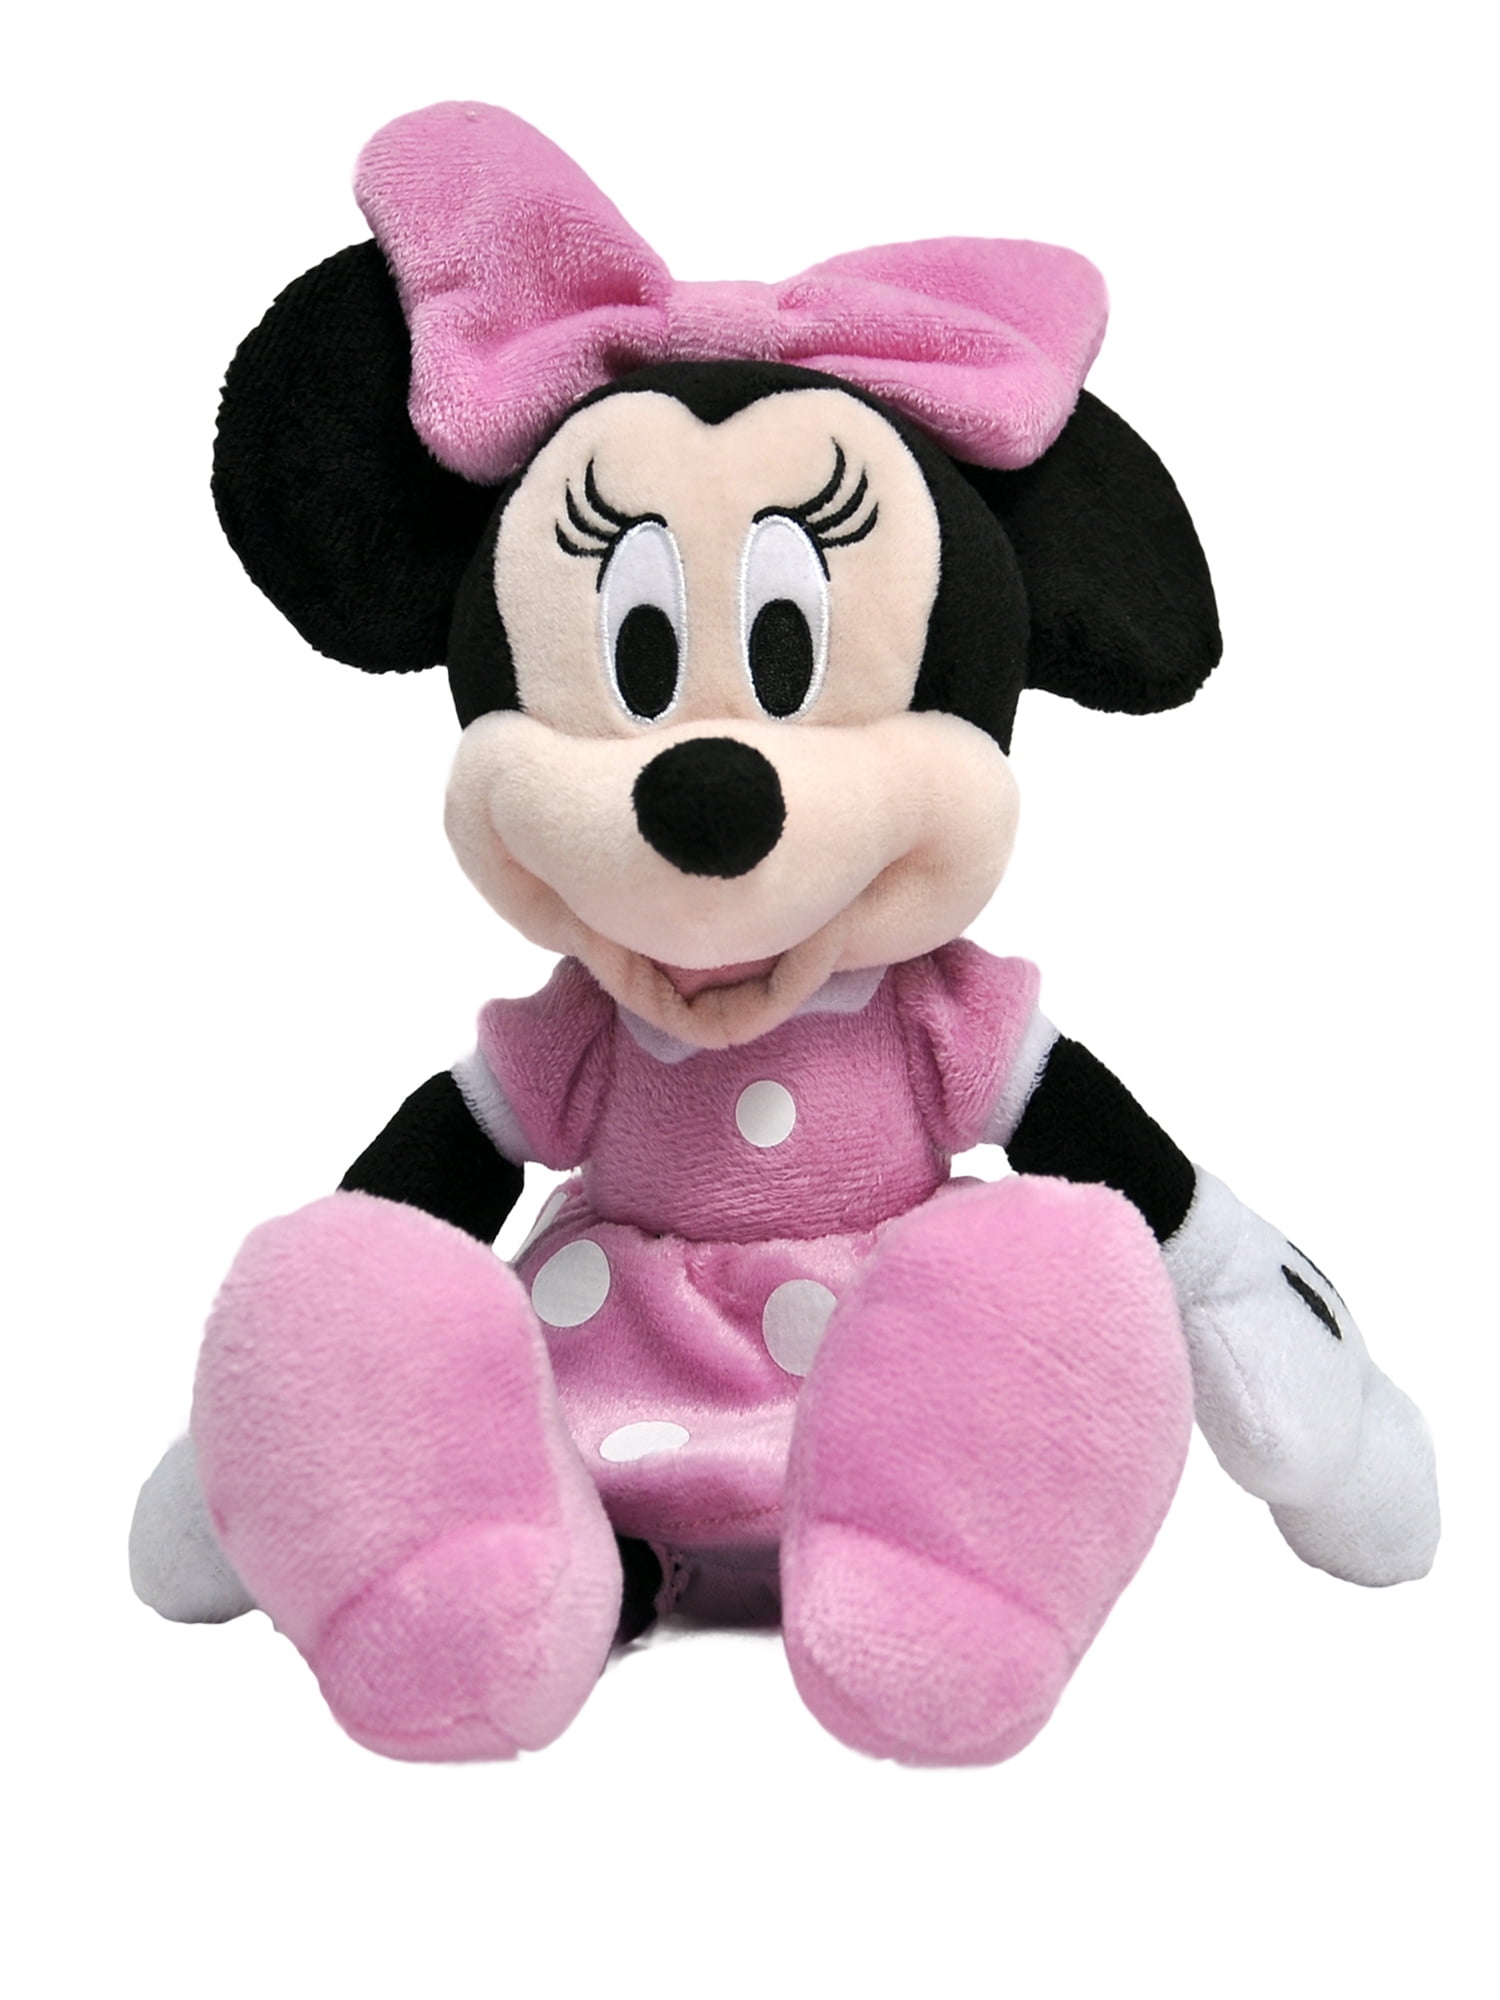 Disney Store Plush Minnie Mouse 20" Pink Polka Dot Dress Stuffed Animal Toy 